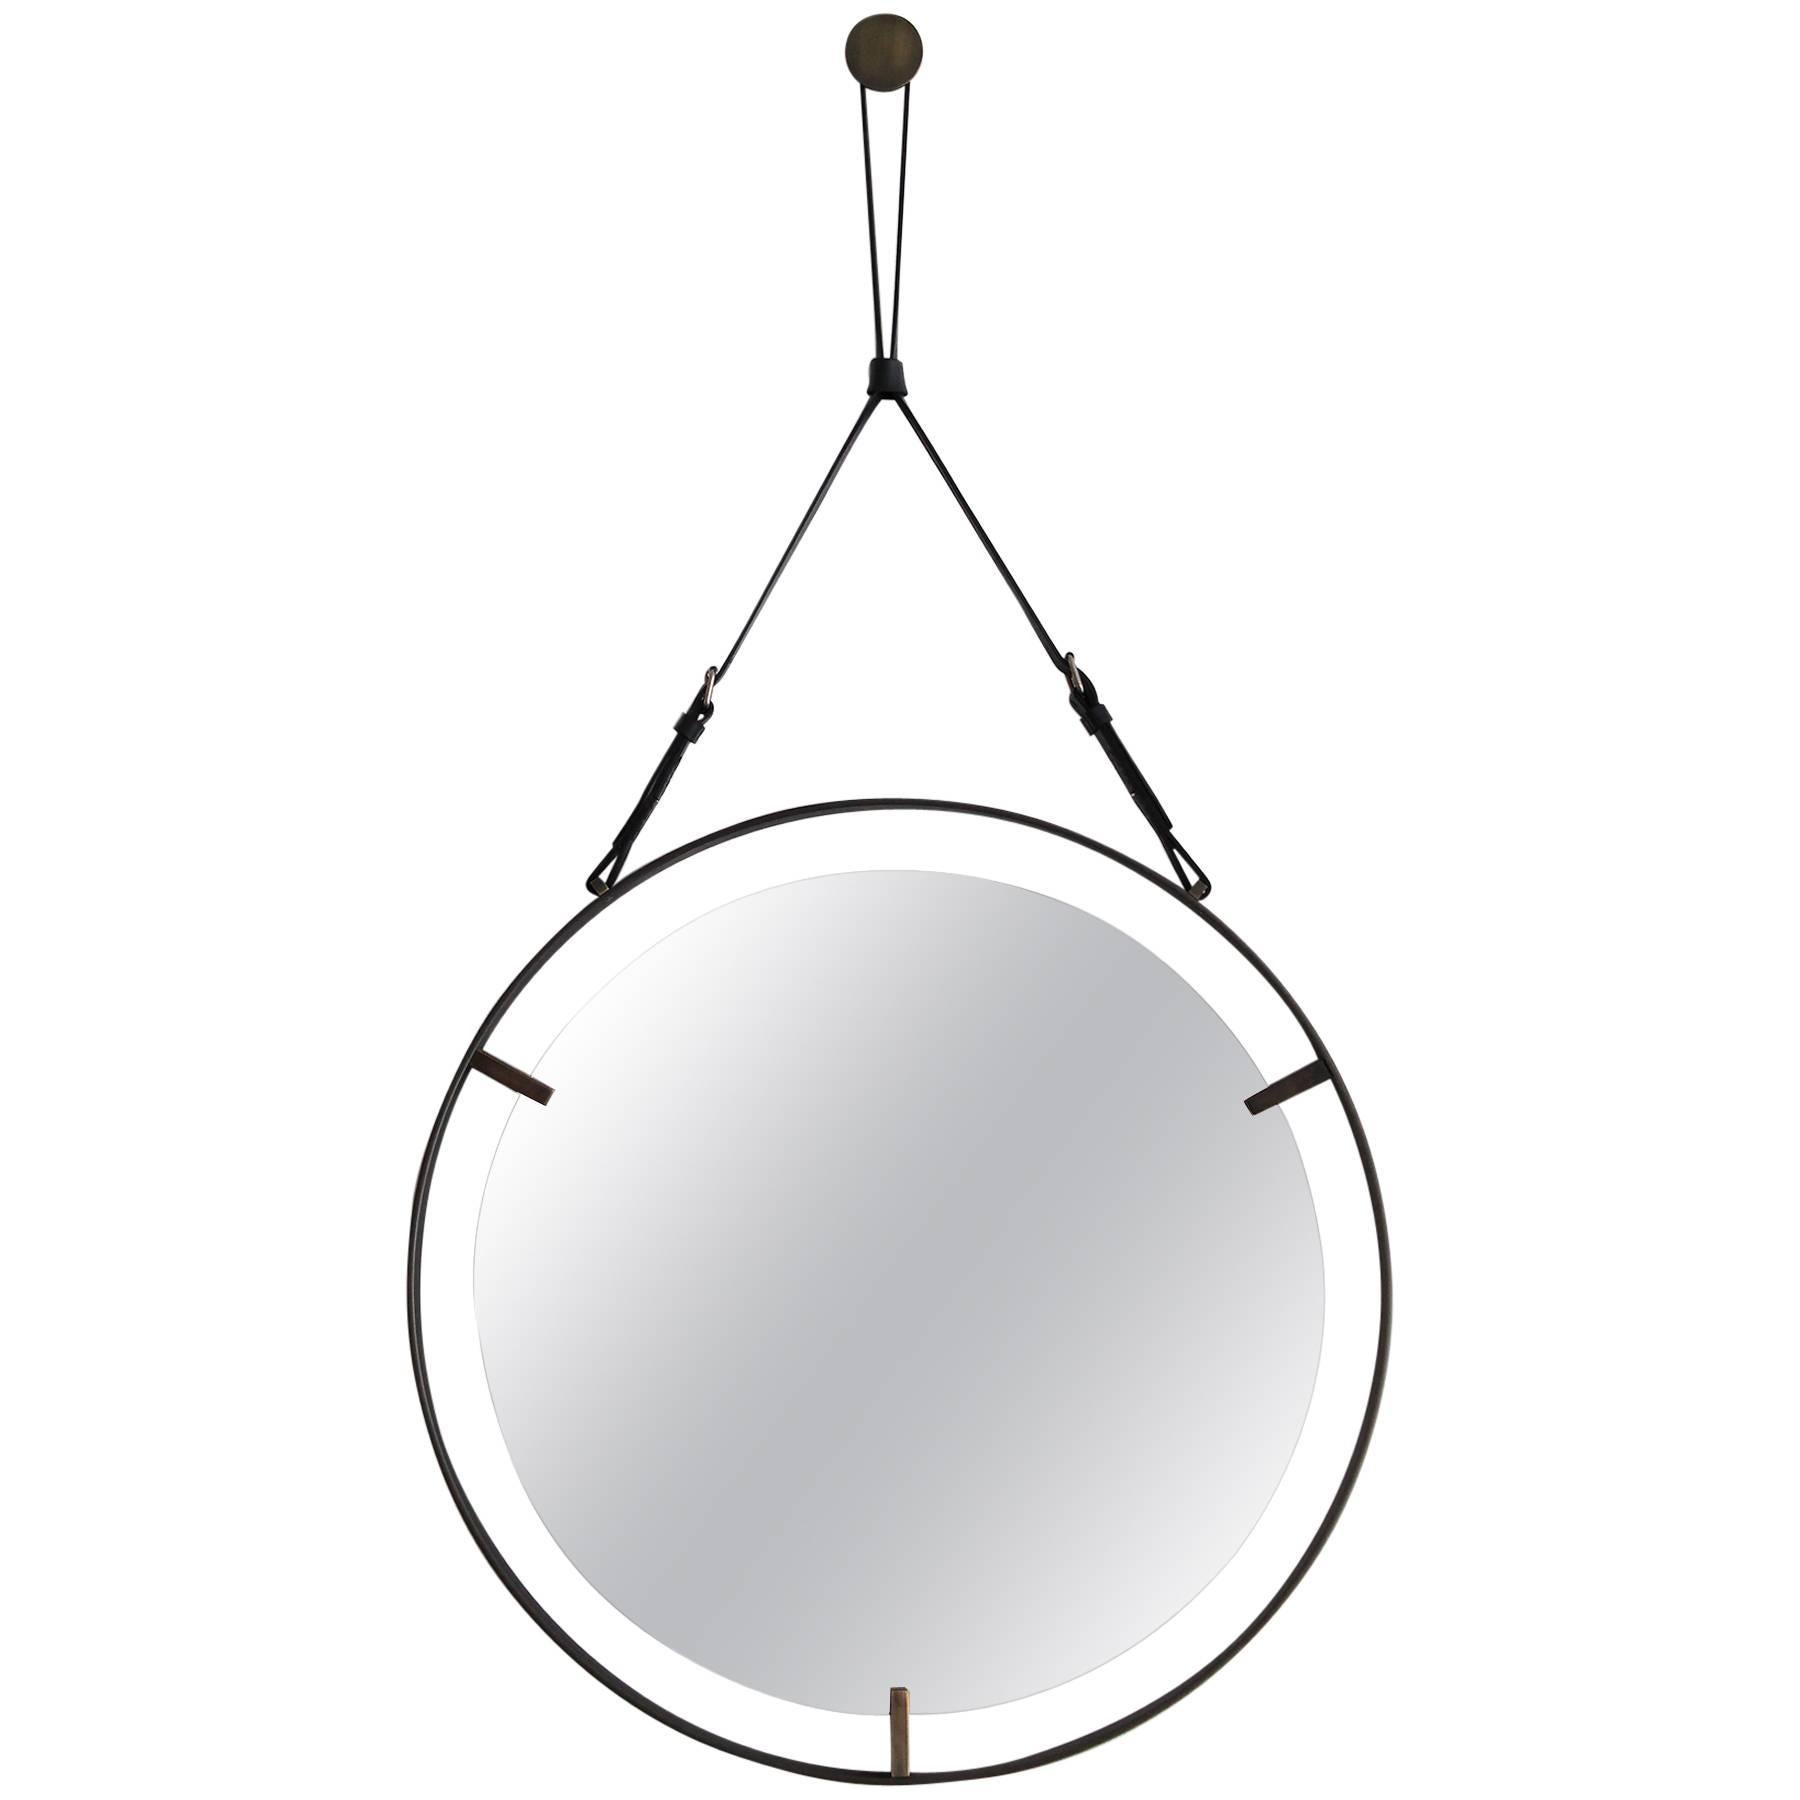 Miroir circulaire en métal et cuir